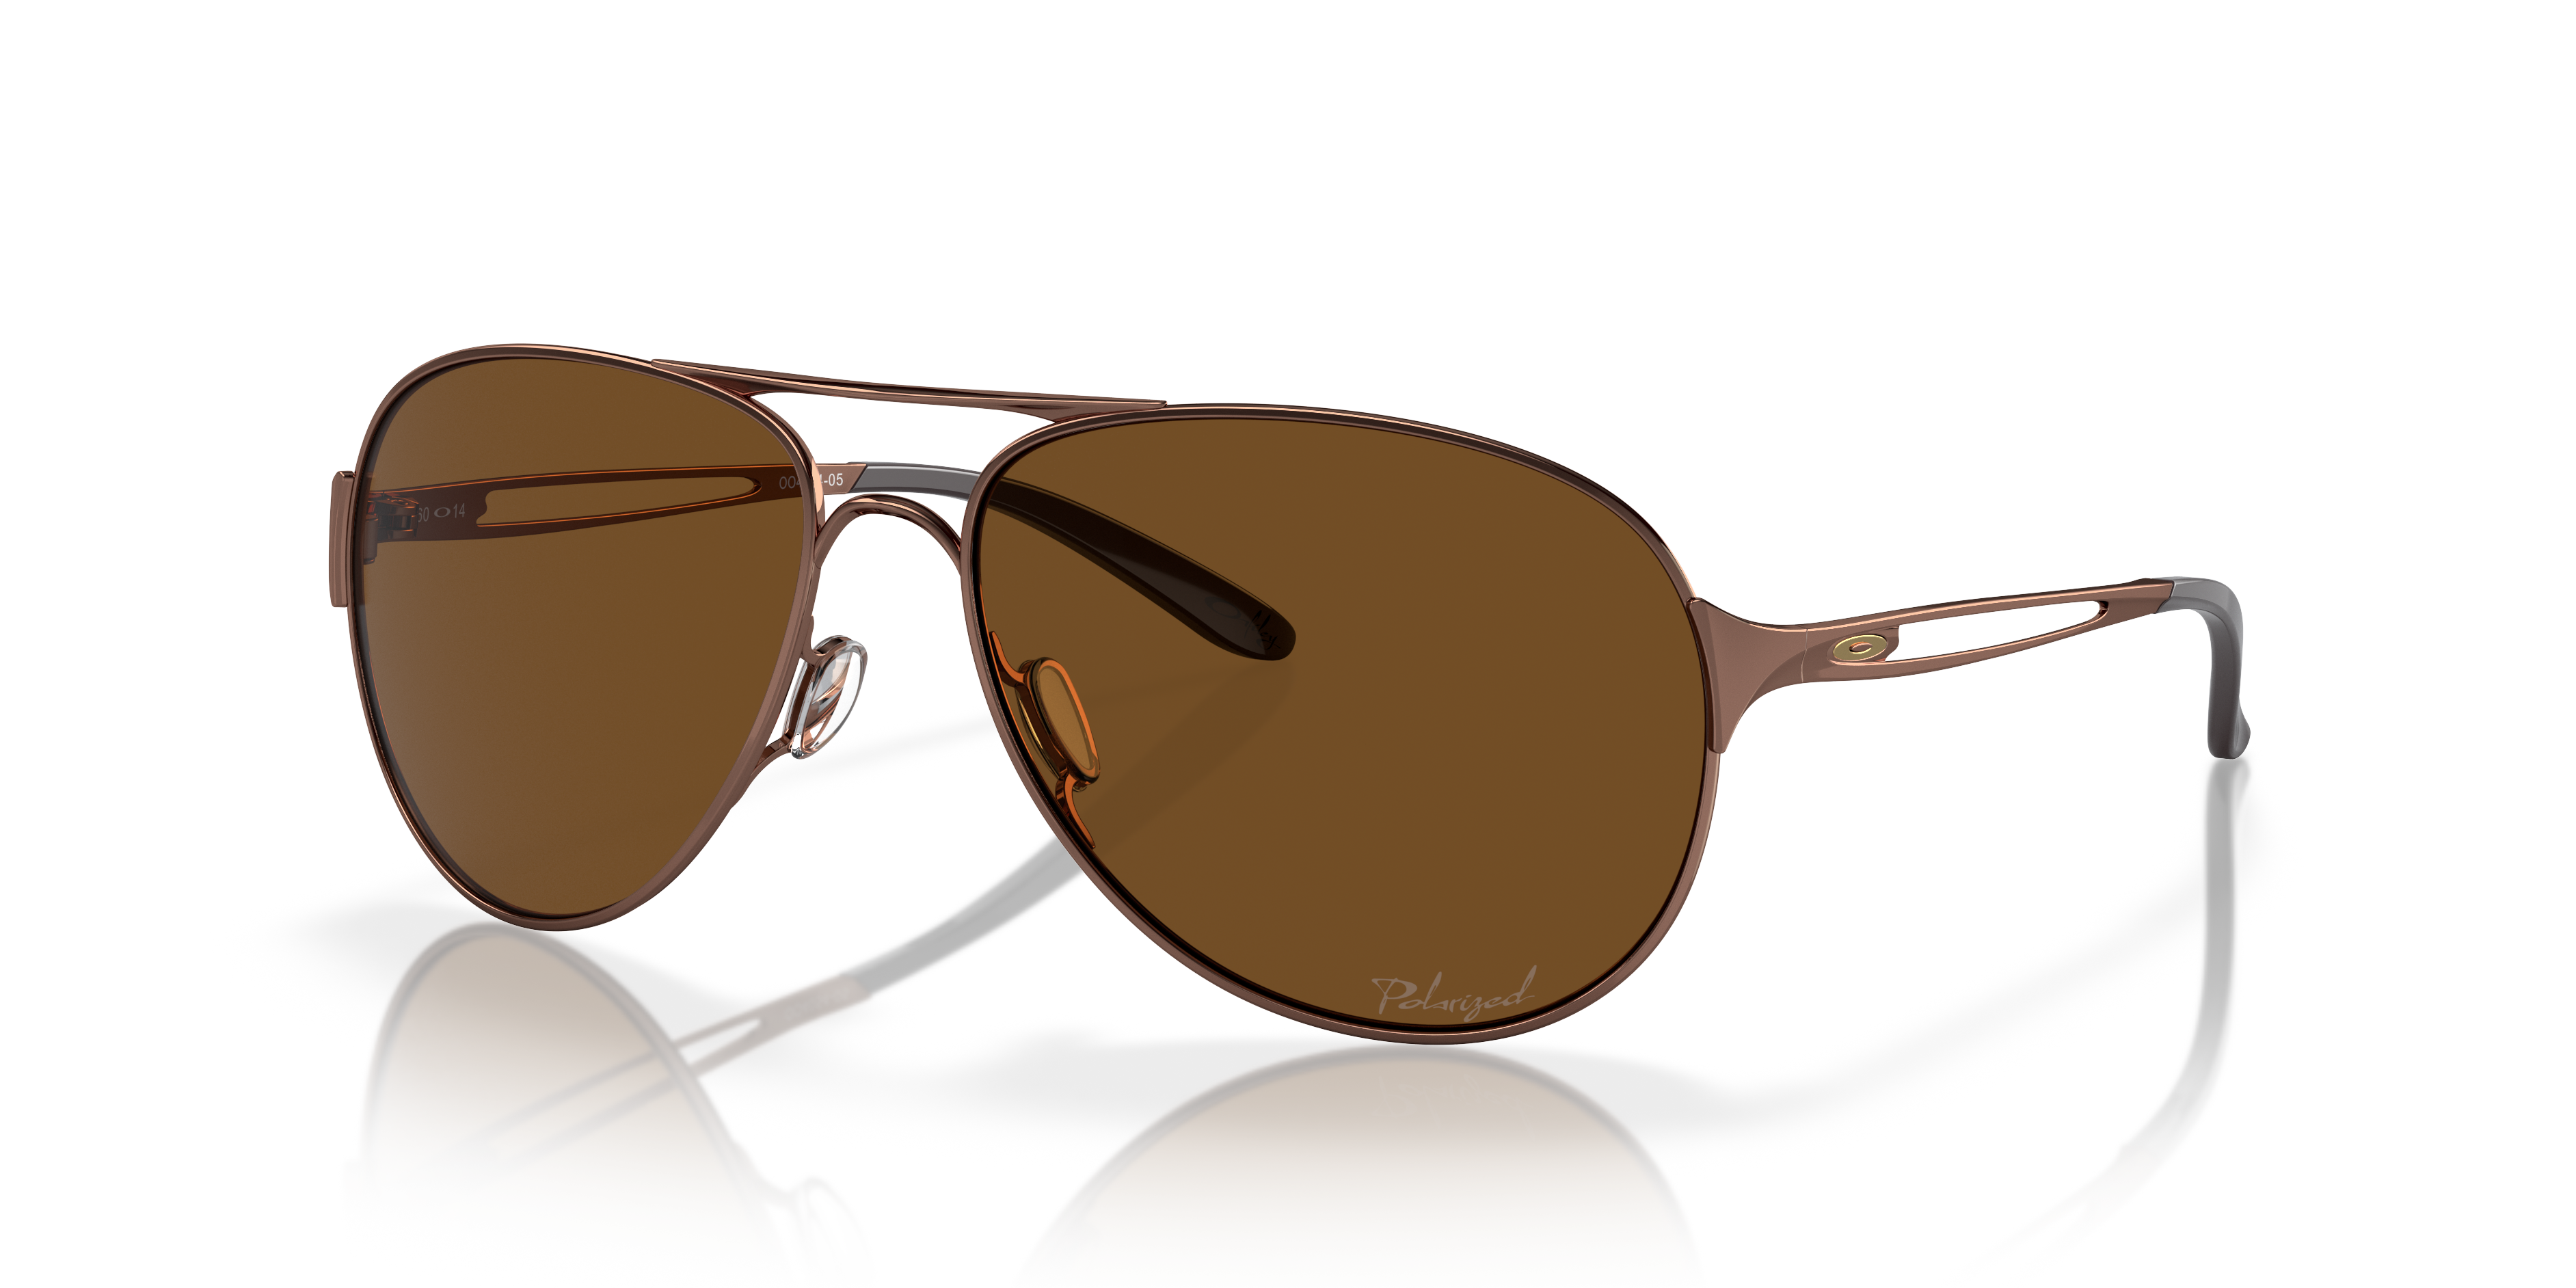 Sunglass Hut Biggera Waters | Sunglasses for Men, Women & Kids